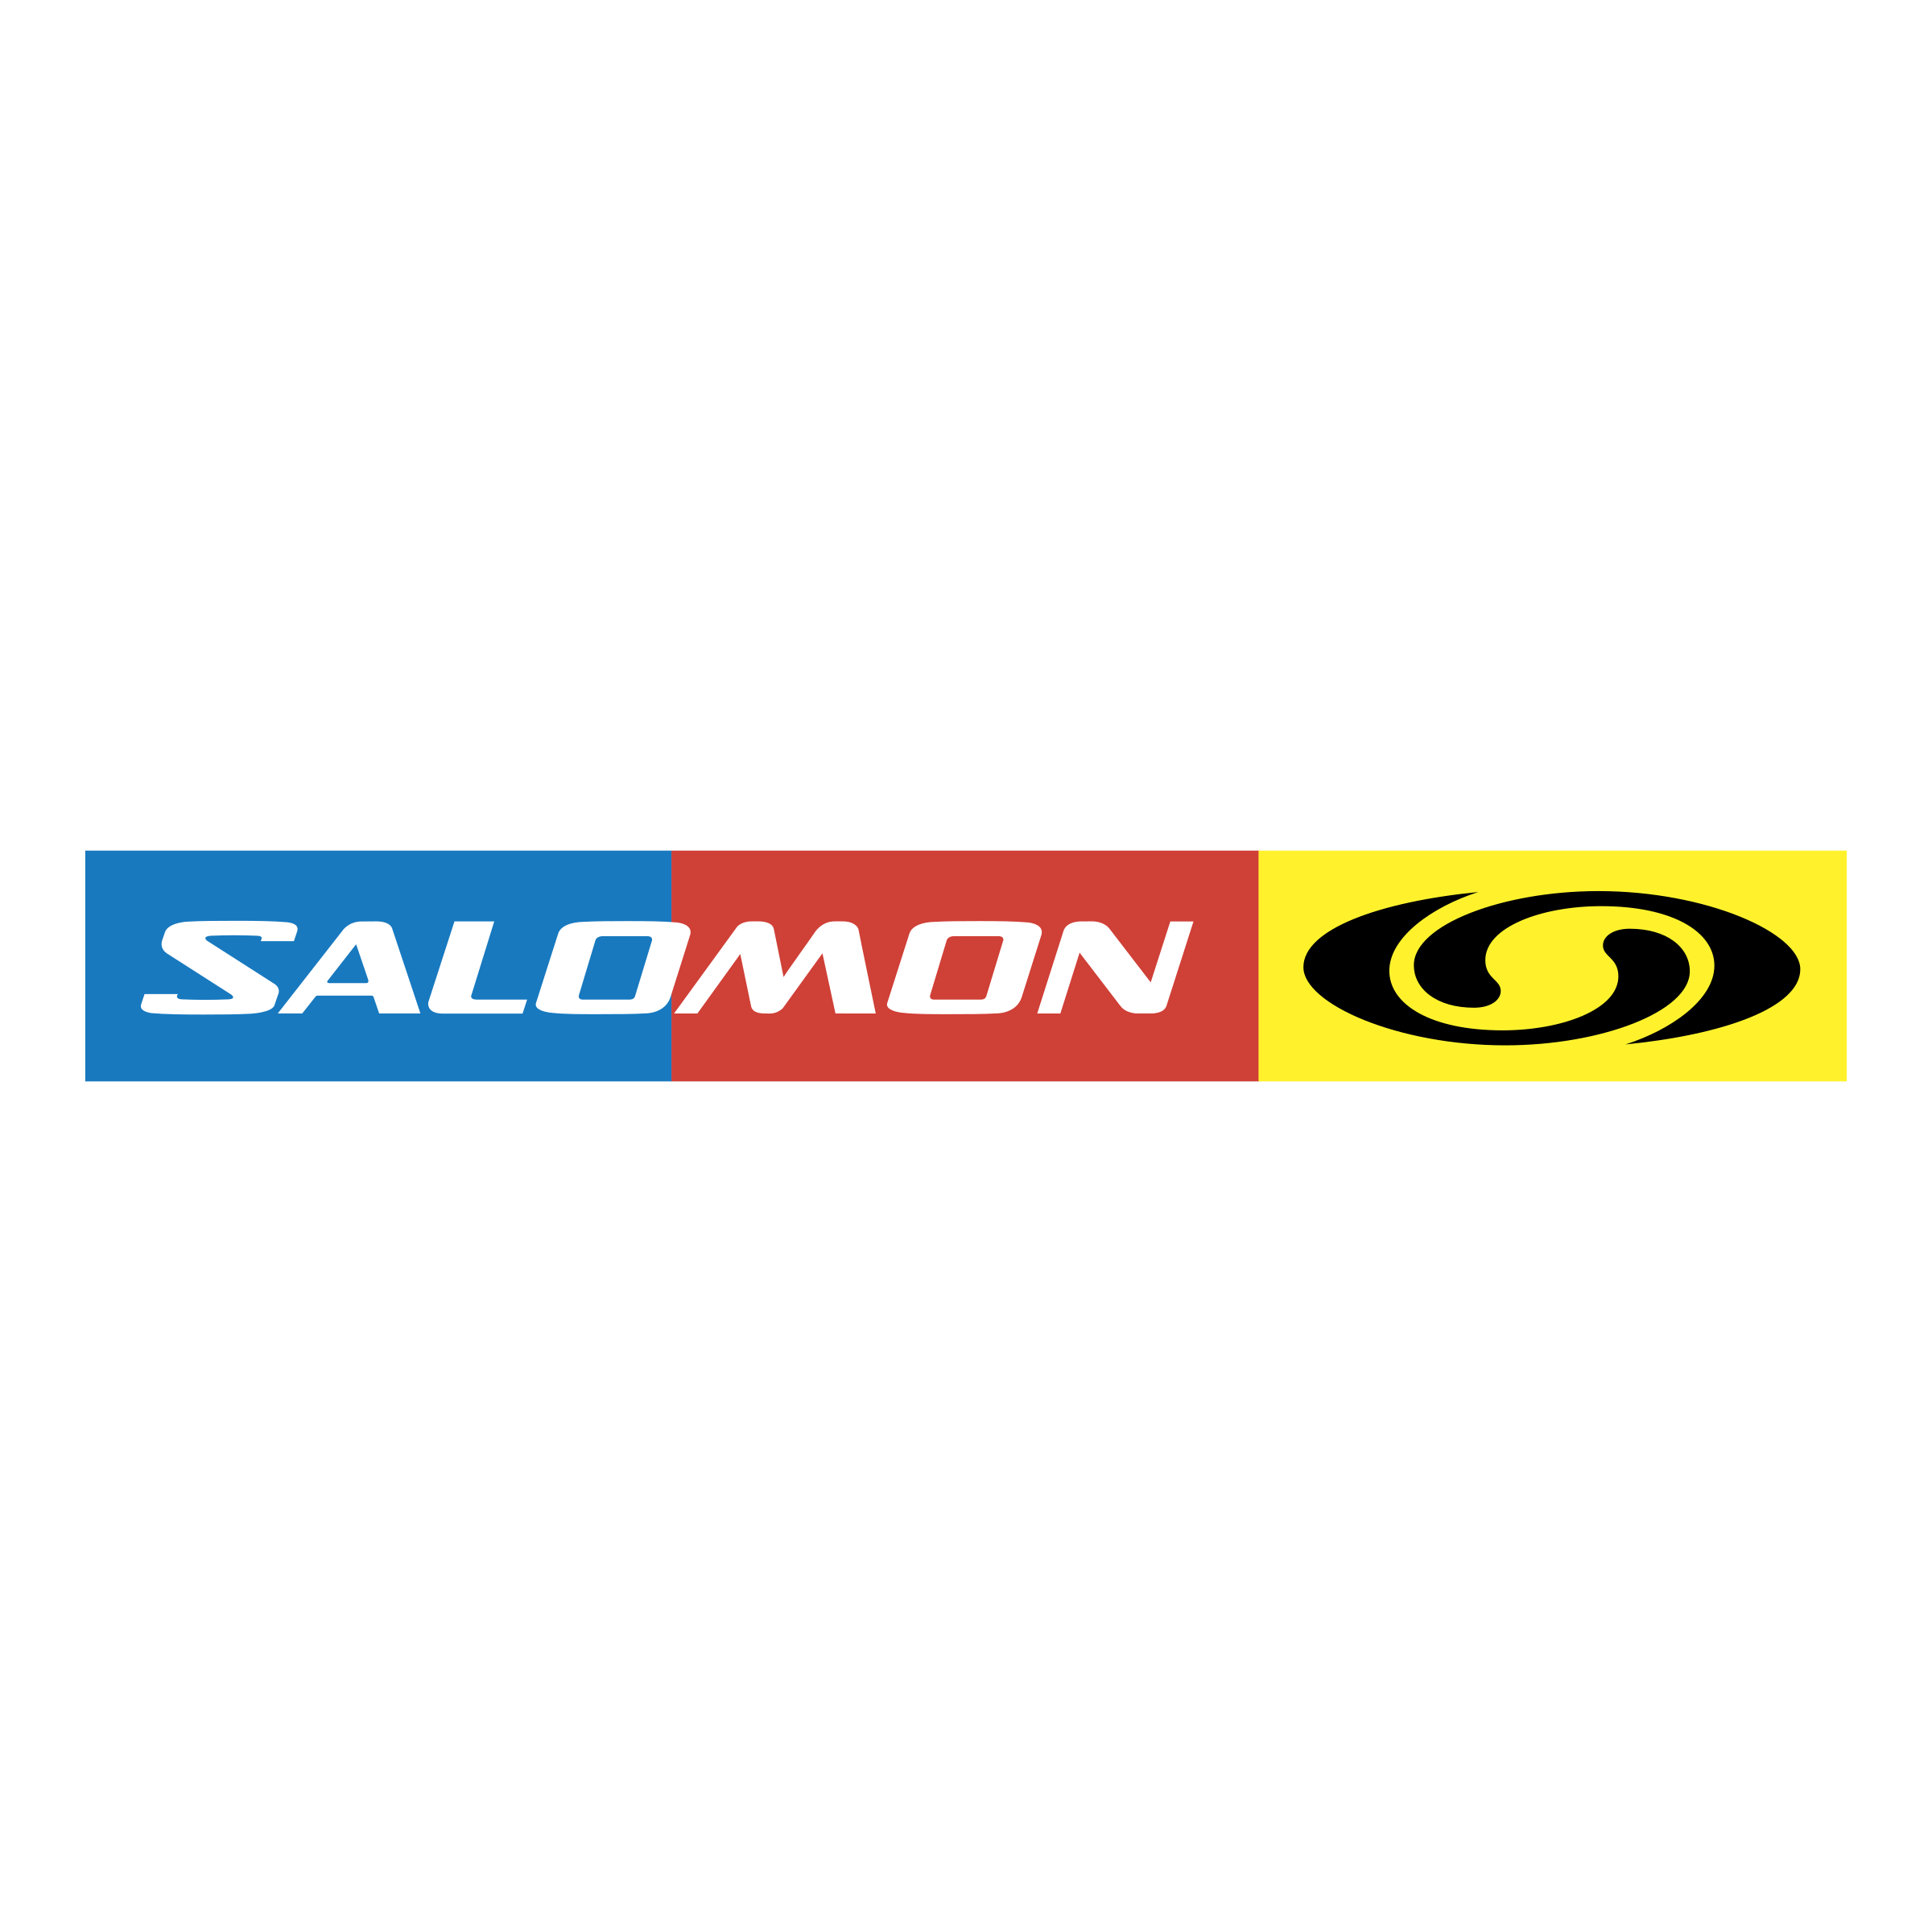 Salomon Logo - Salomon Logo PNG Transparent & SVG Vector - Freebie Supply